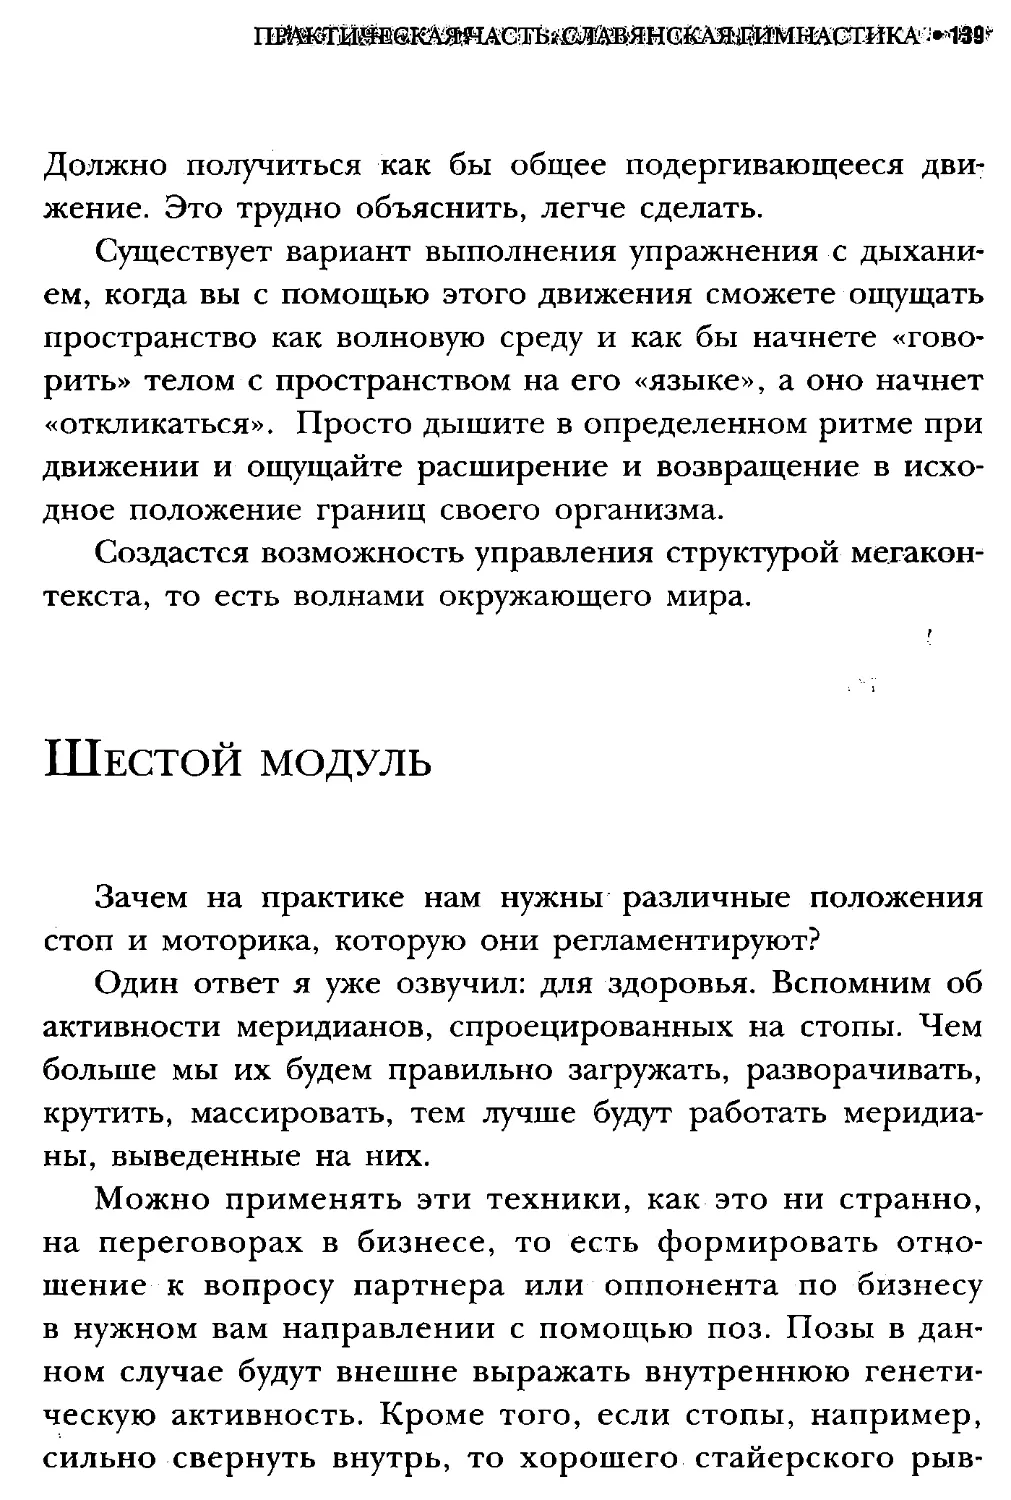 ﻿СлавянеТекст_page0069_2